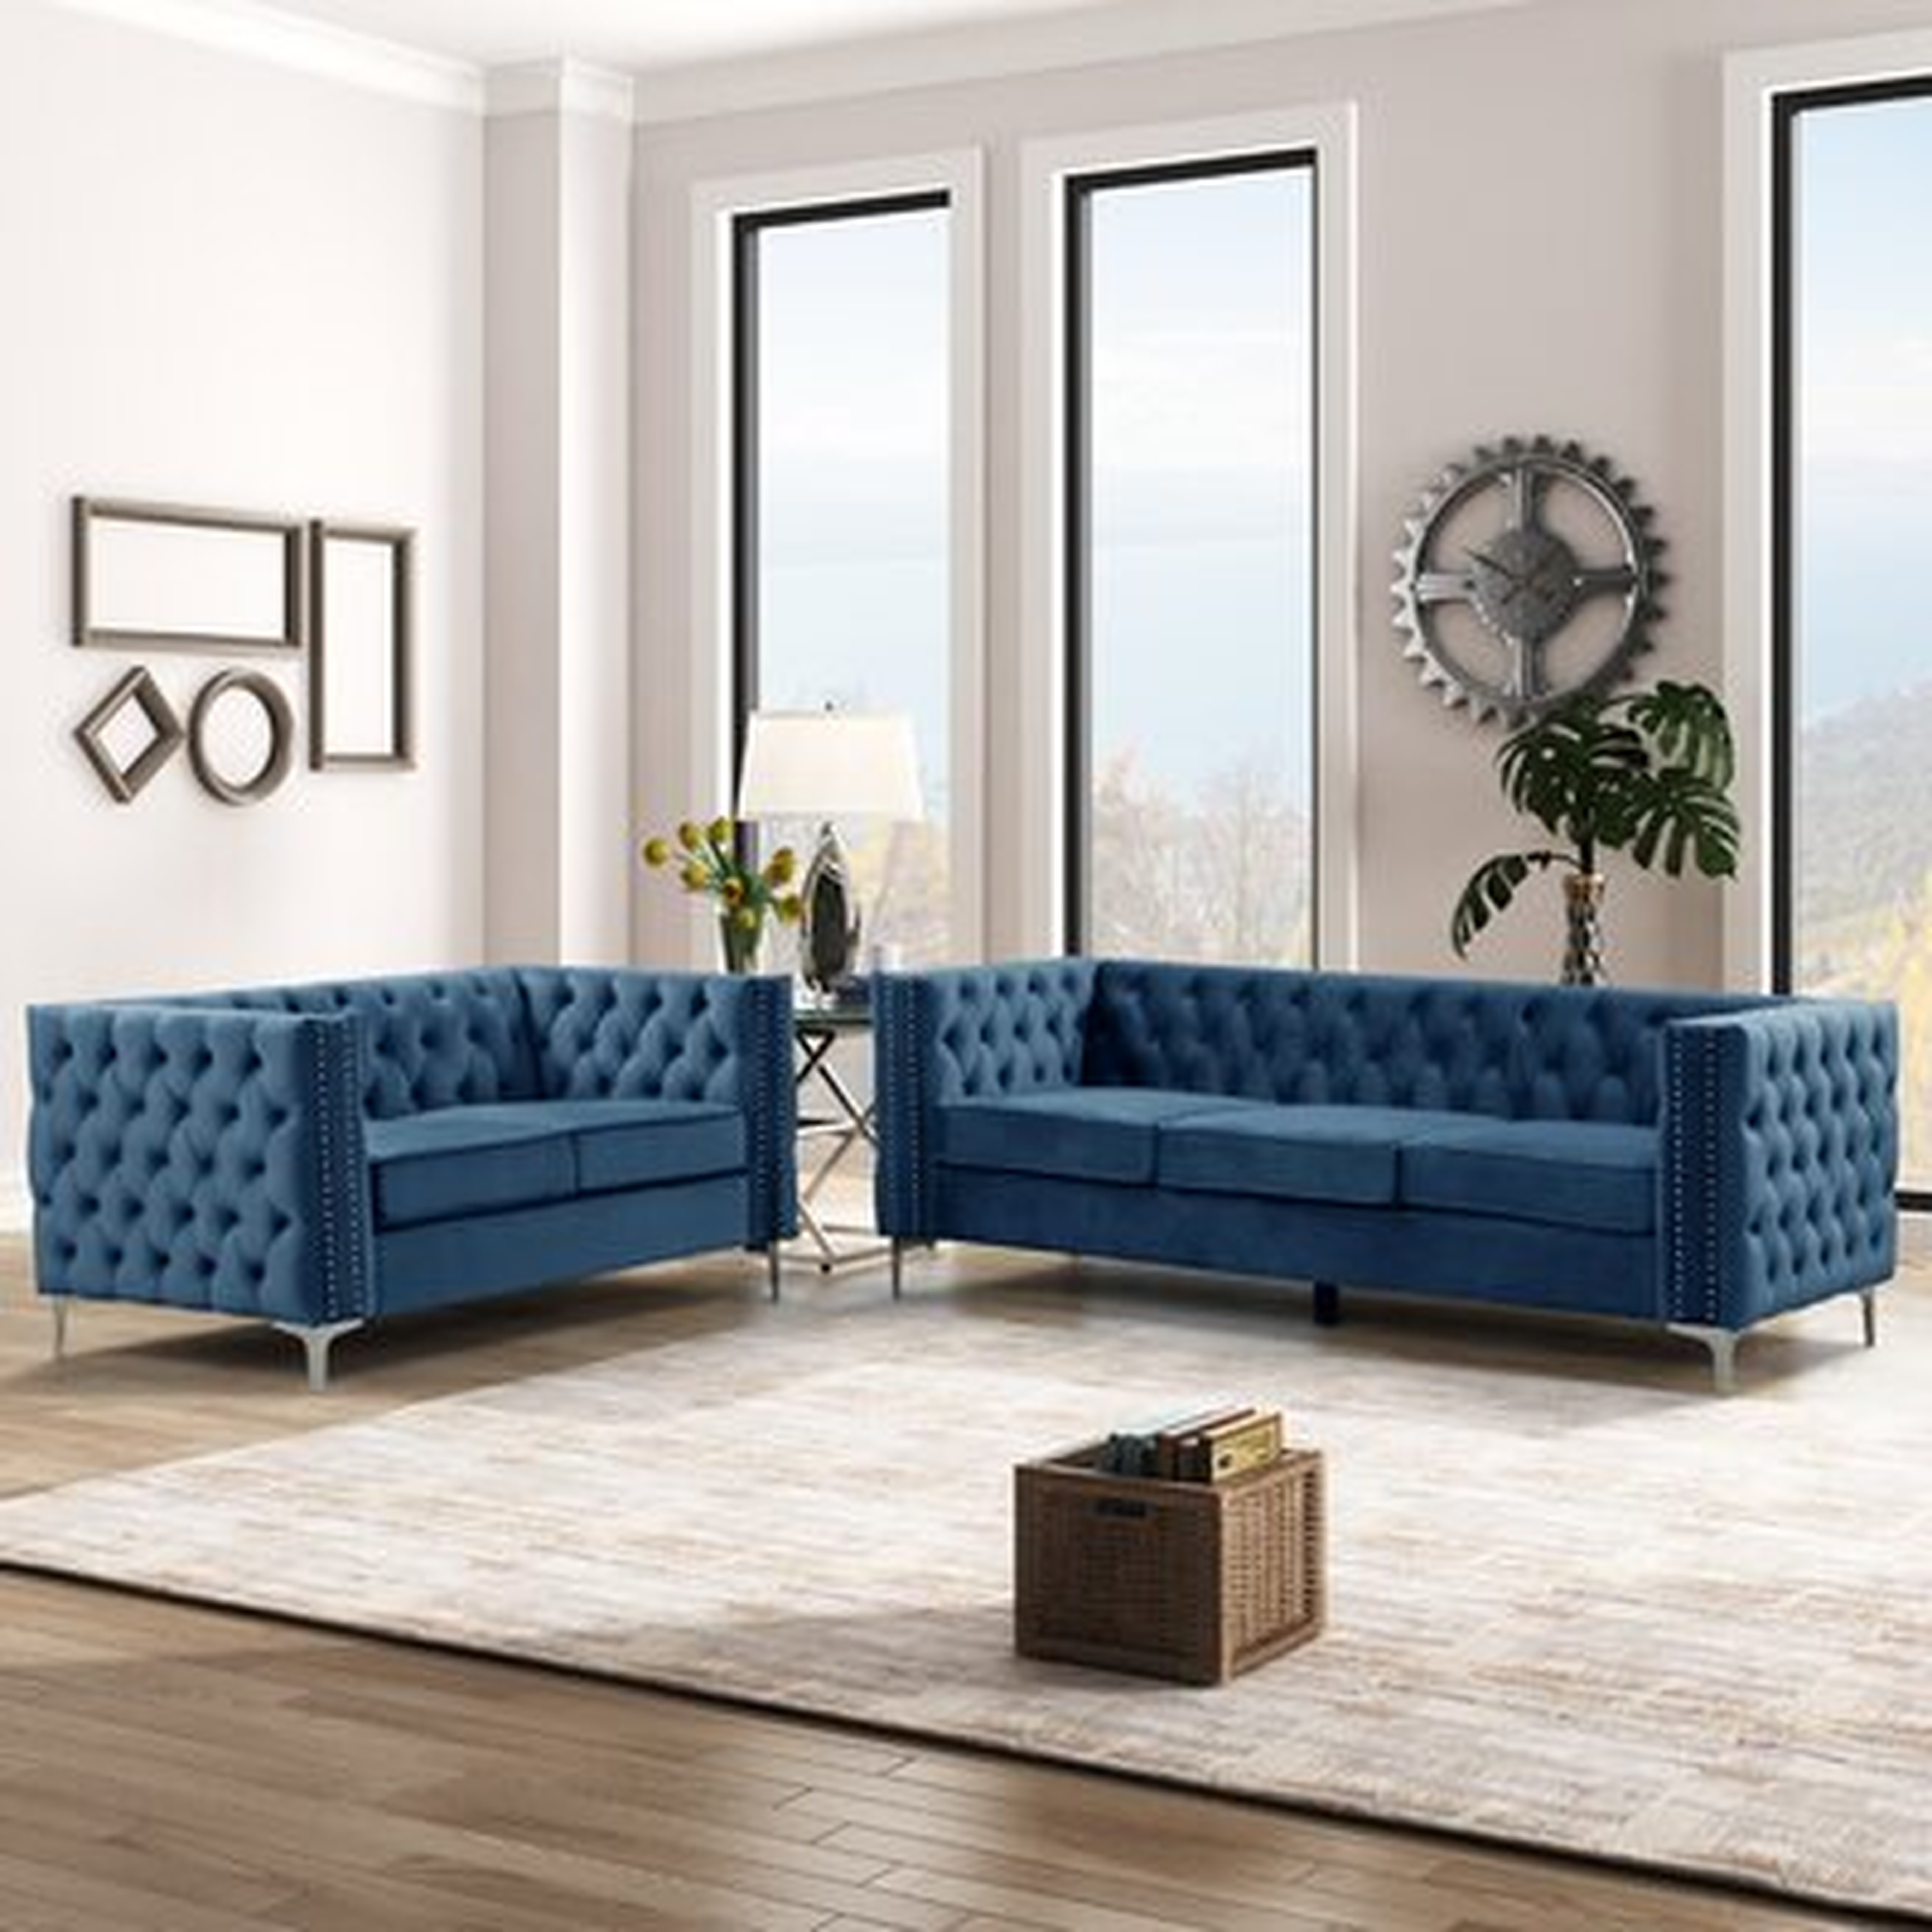 Modern 2 Pieces Of Loveseat And Sofa Sets With Dutch Velvet Blue, Iron Legs - Wayfair